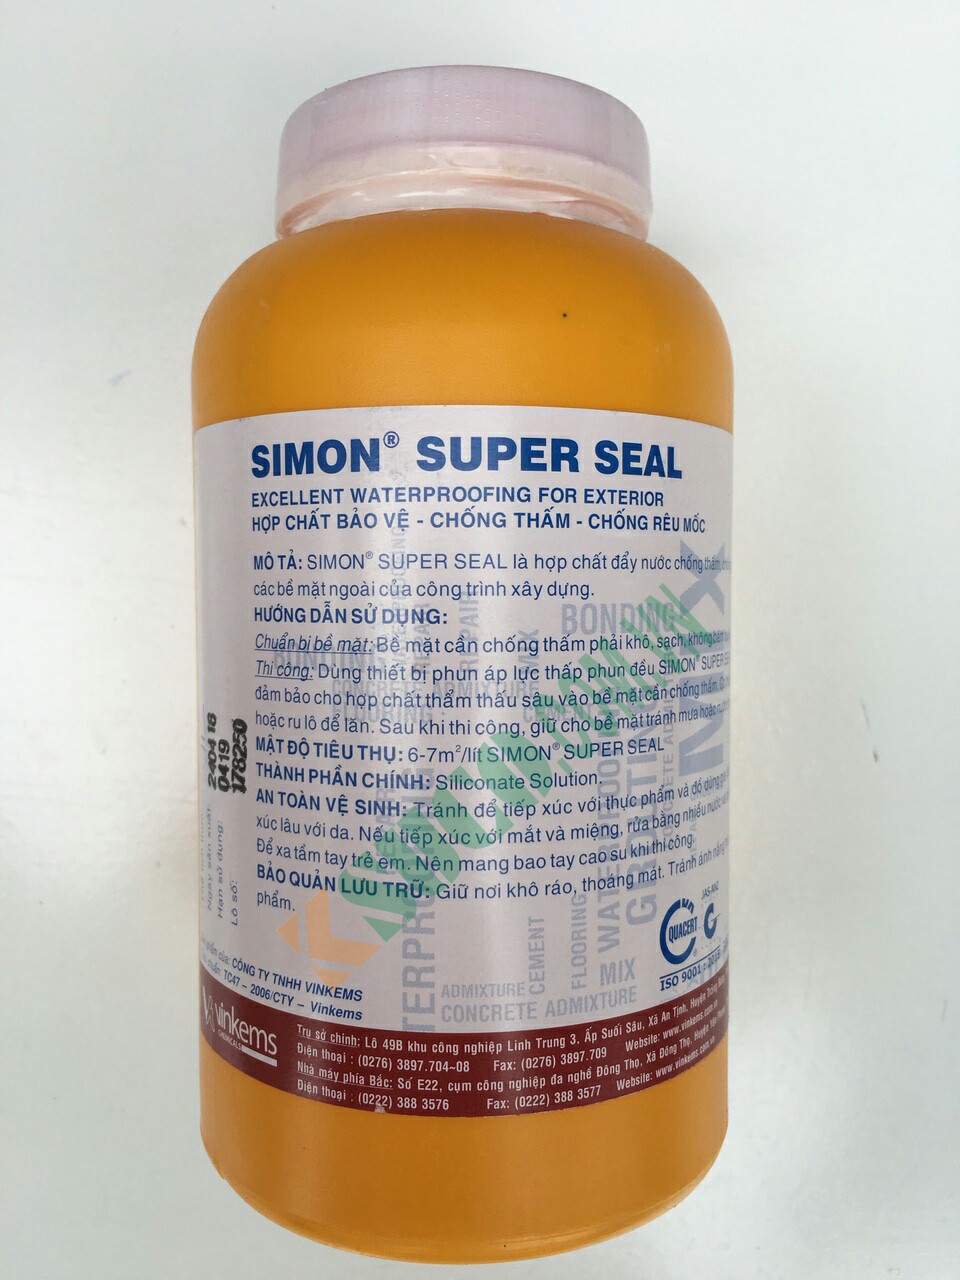 Simon SUPER SEAL